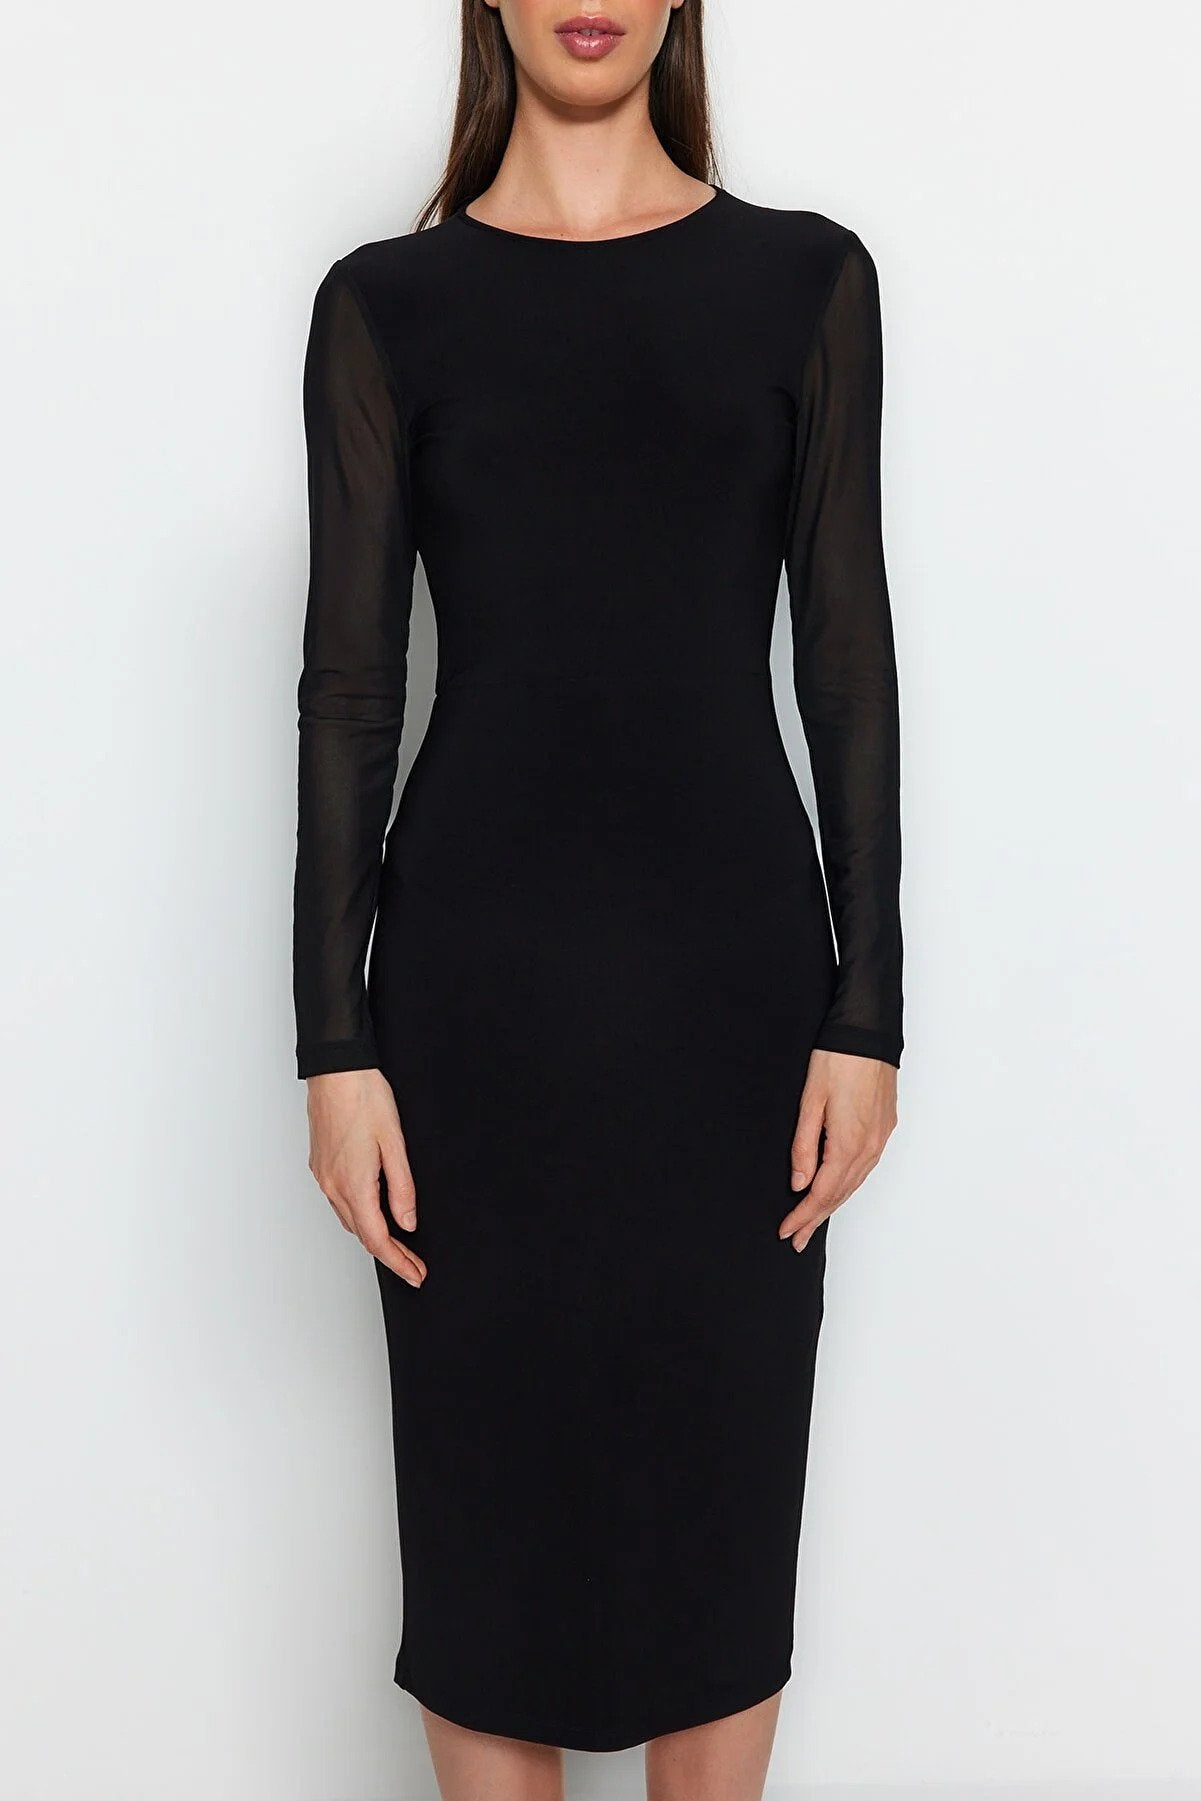 Trendyol Black Bodycon Designed Dress